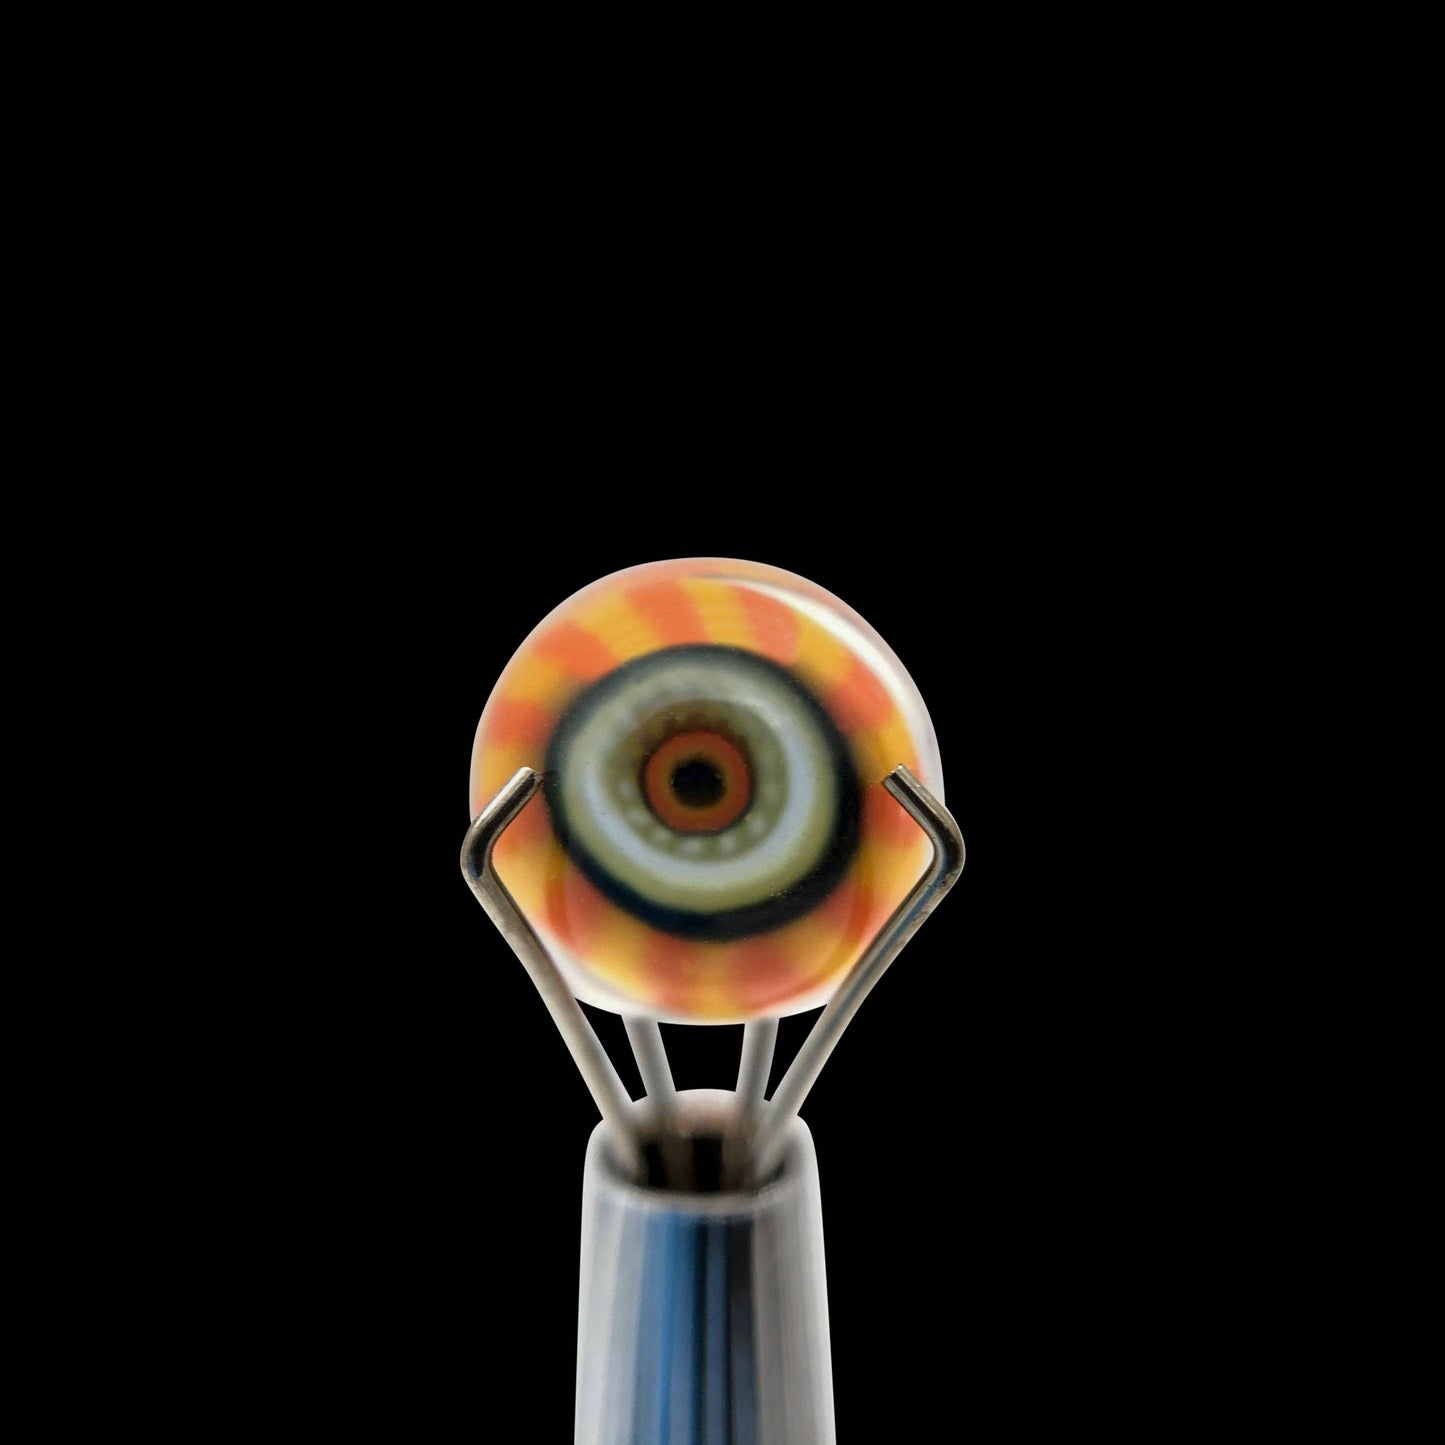 Banjo Glass Art - Orange/Yellow Eyes Pearl Size 7.5mm-7.8mm - OPS.com